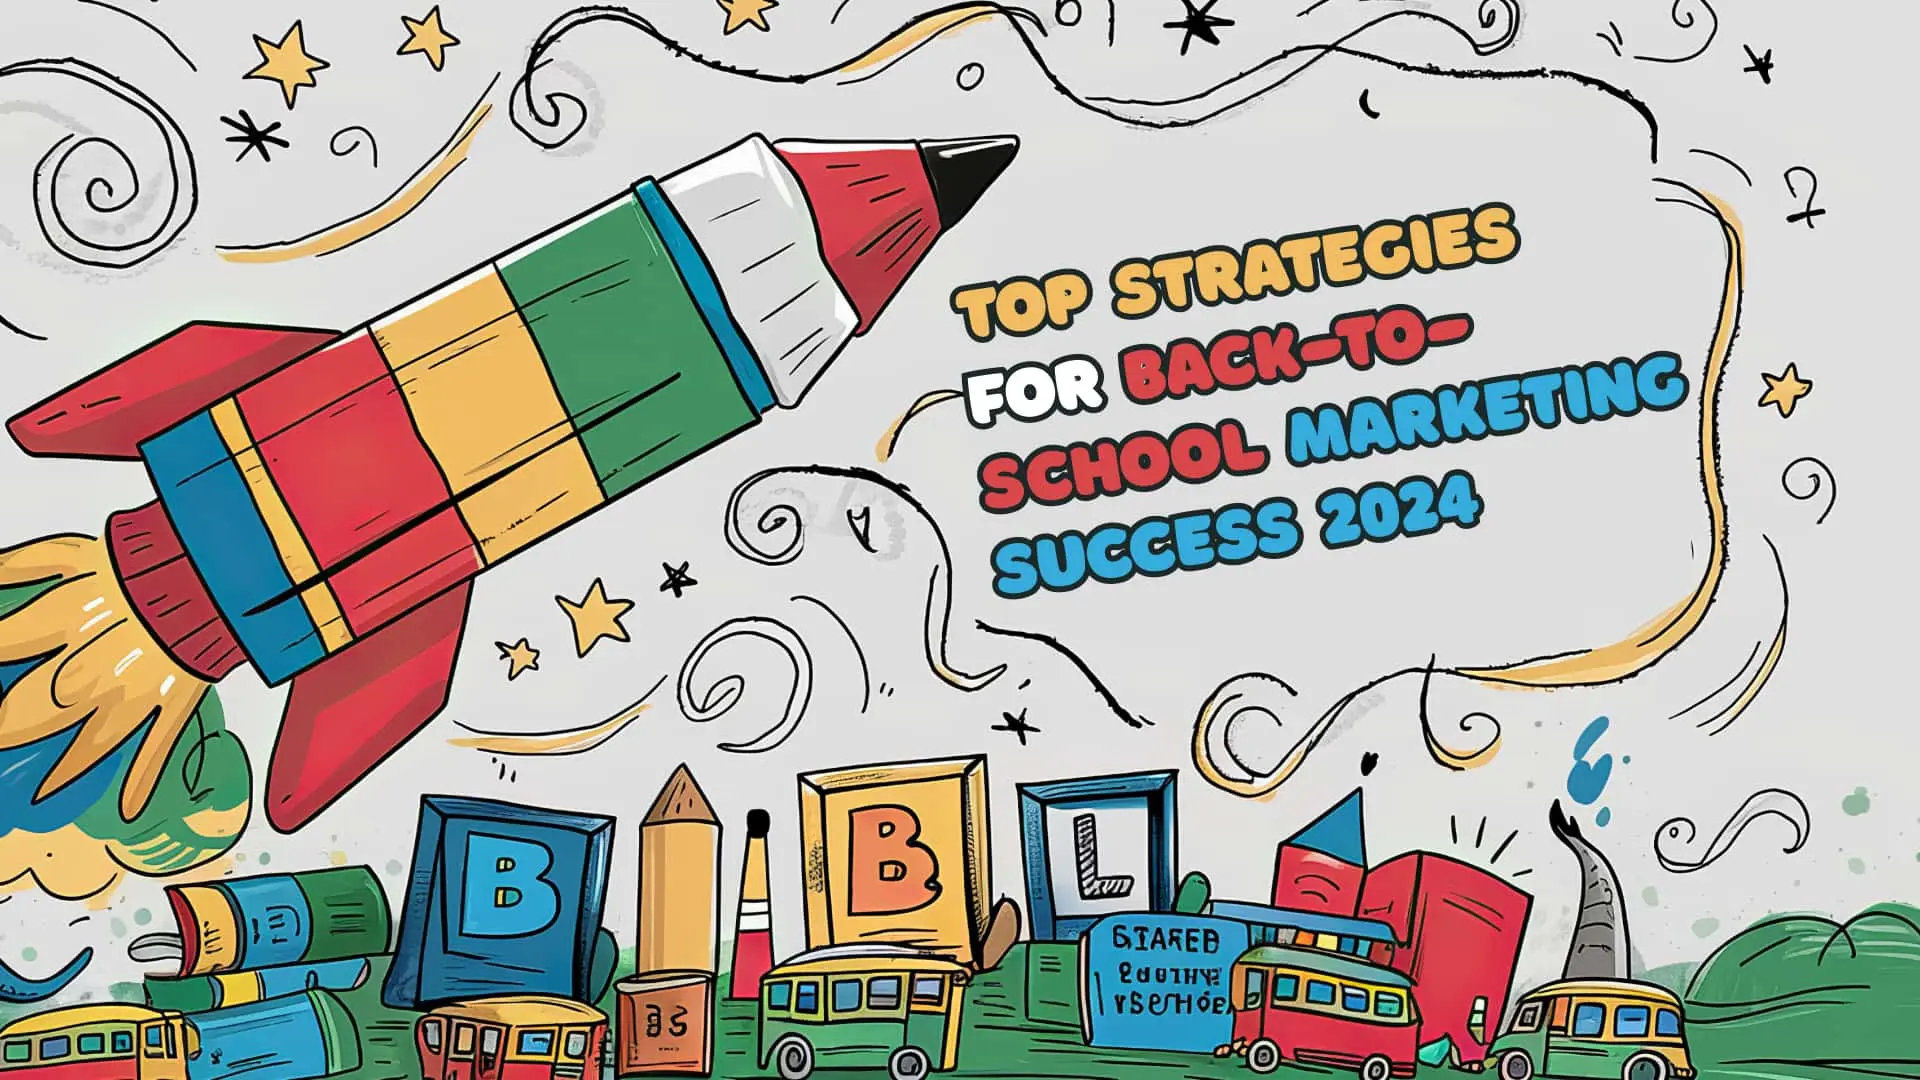 Back-to-School Marketing Success 2024